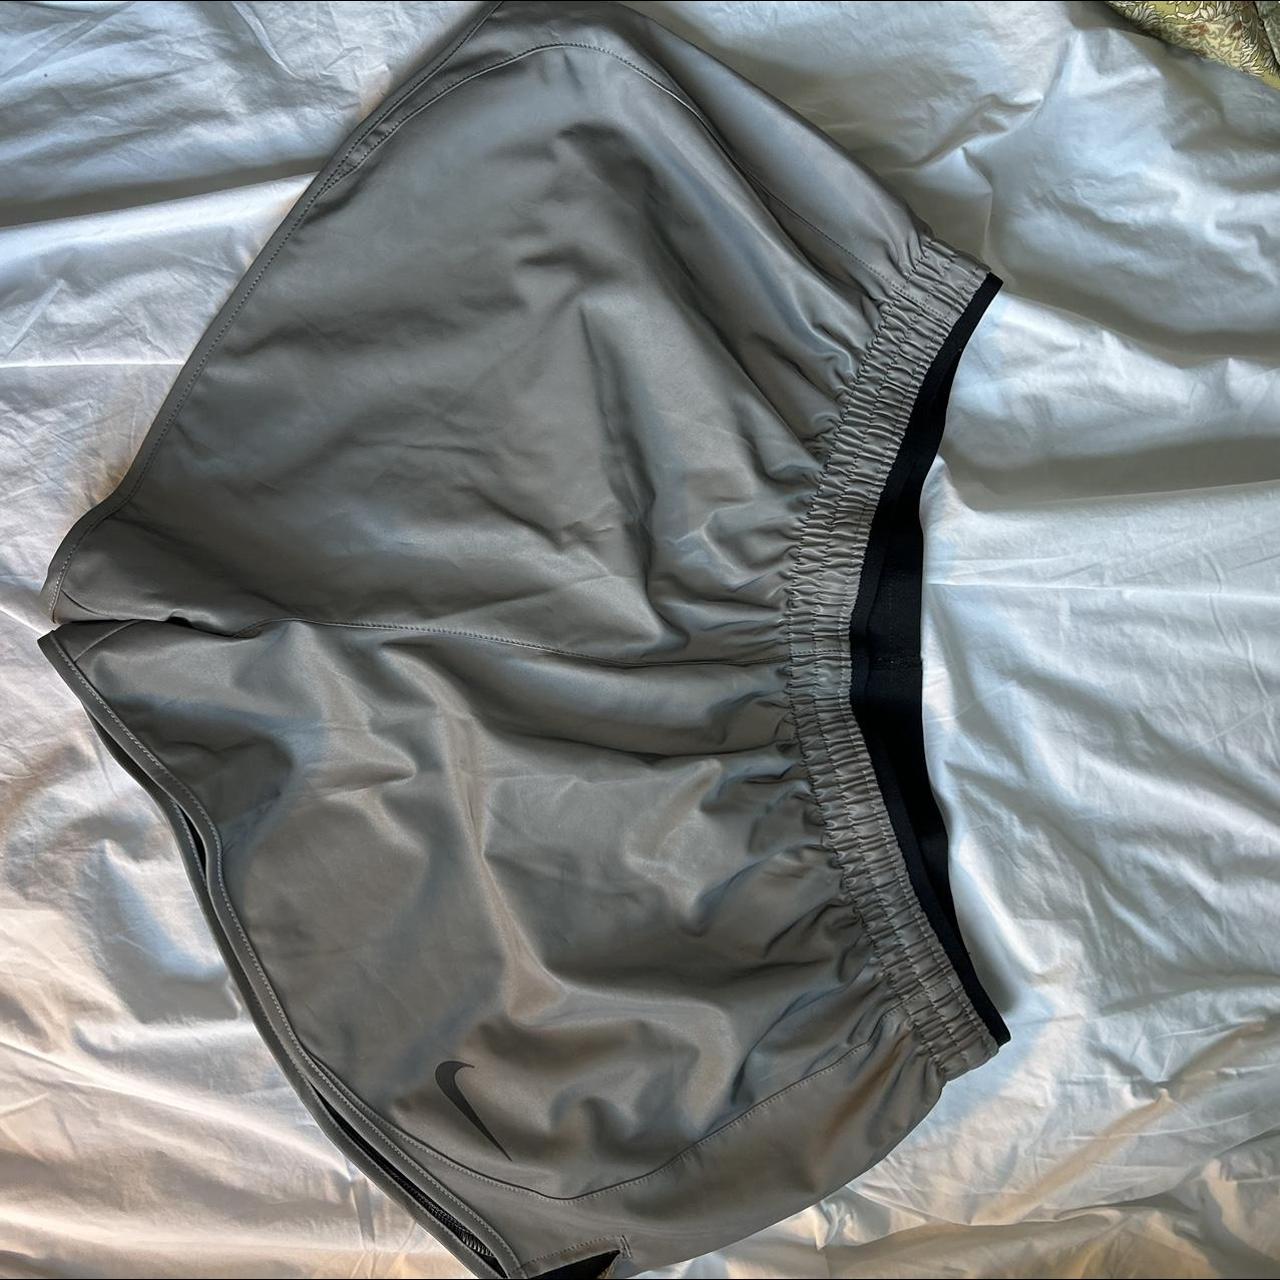 #Nike fully #reflective running shorts size XL I’d... - Depop